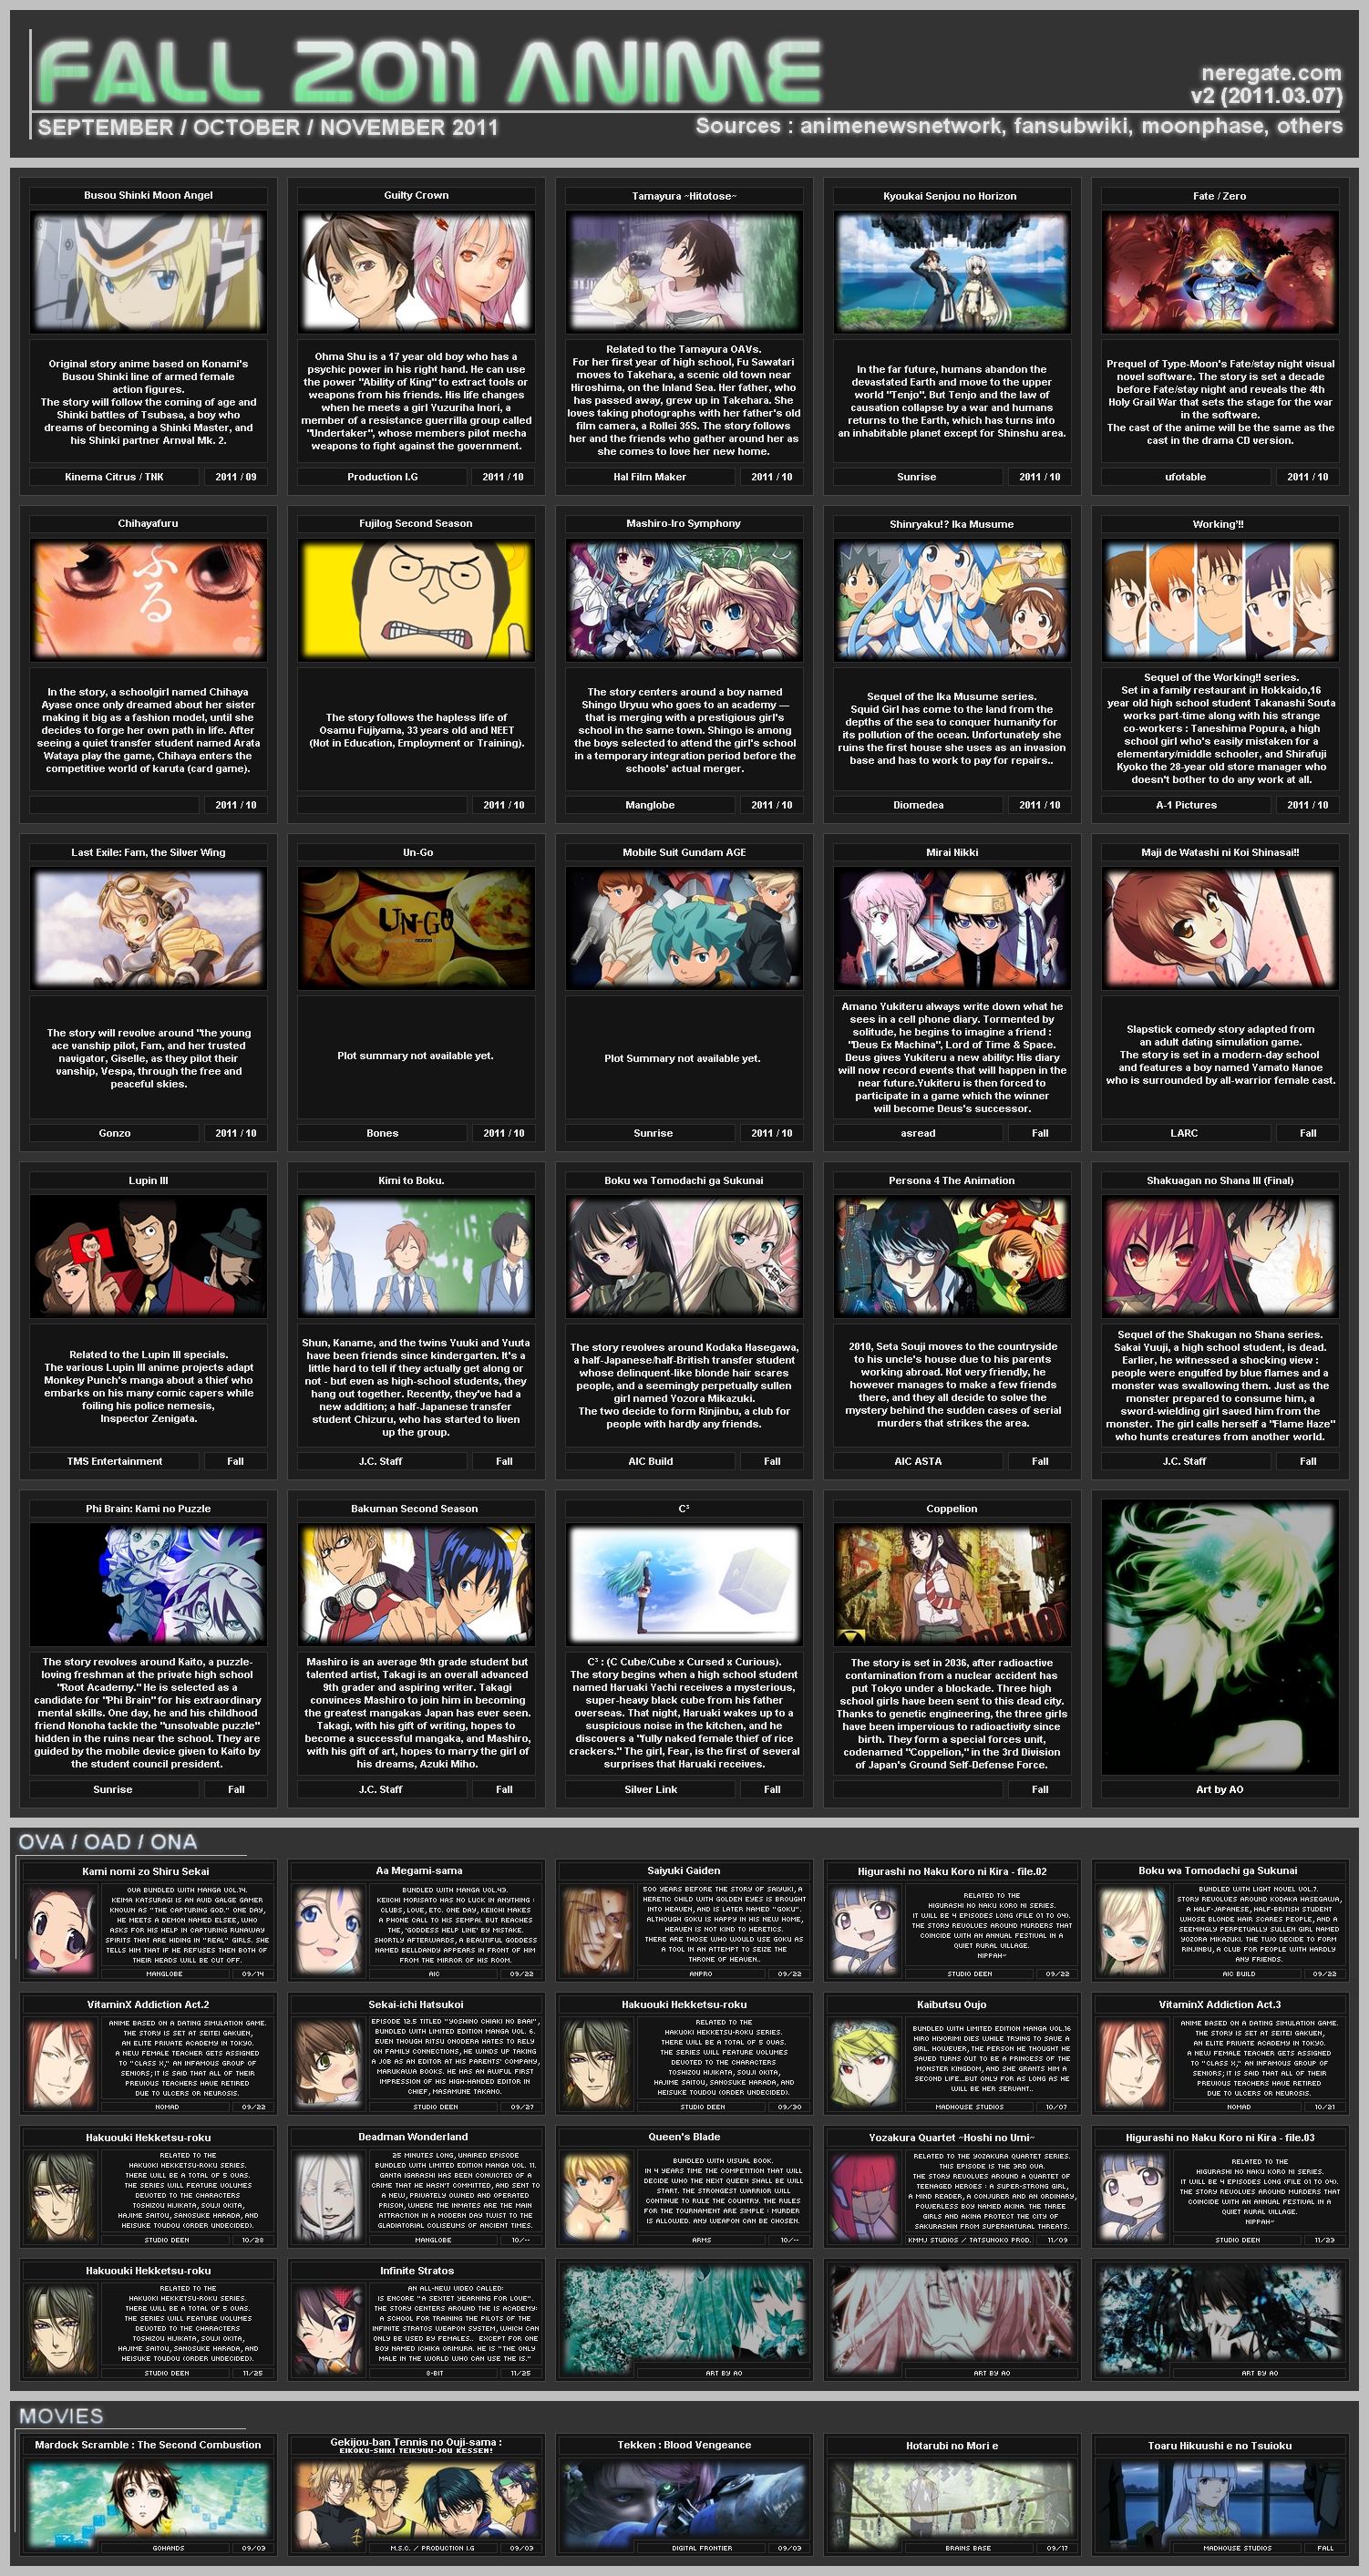 http://mangaweekend.files.wordpress.com/2011/07/neregate-com-fall-2011-anime-v2.jpg